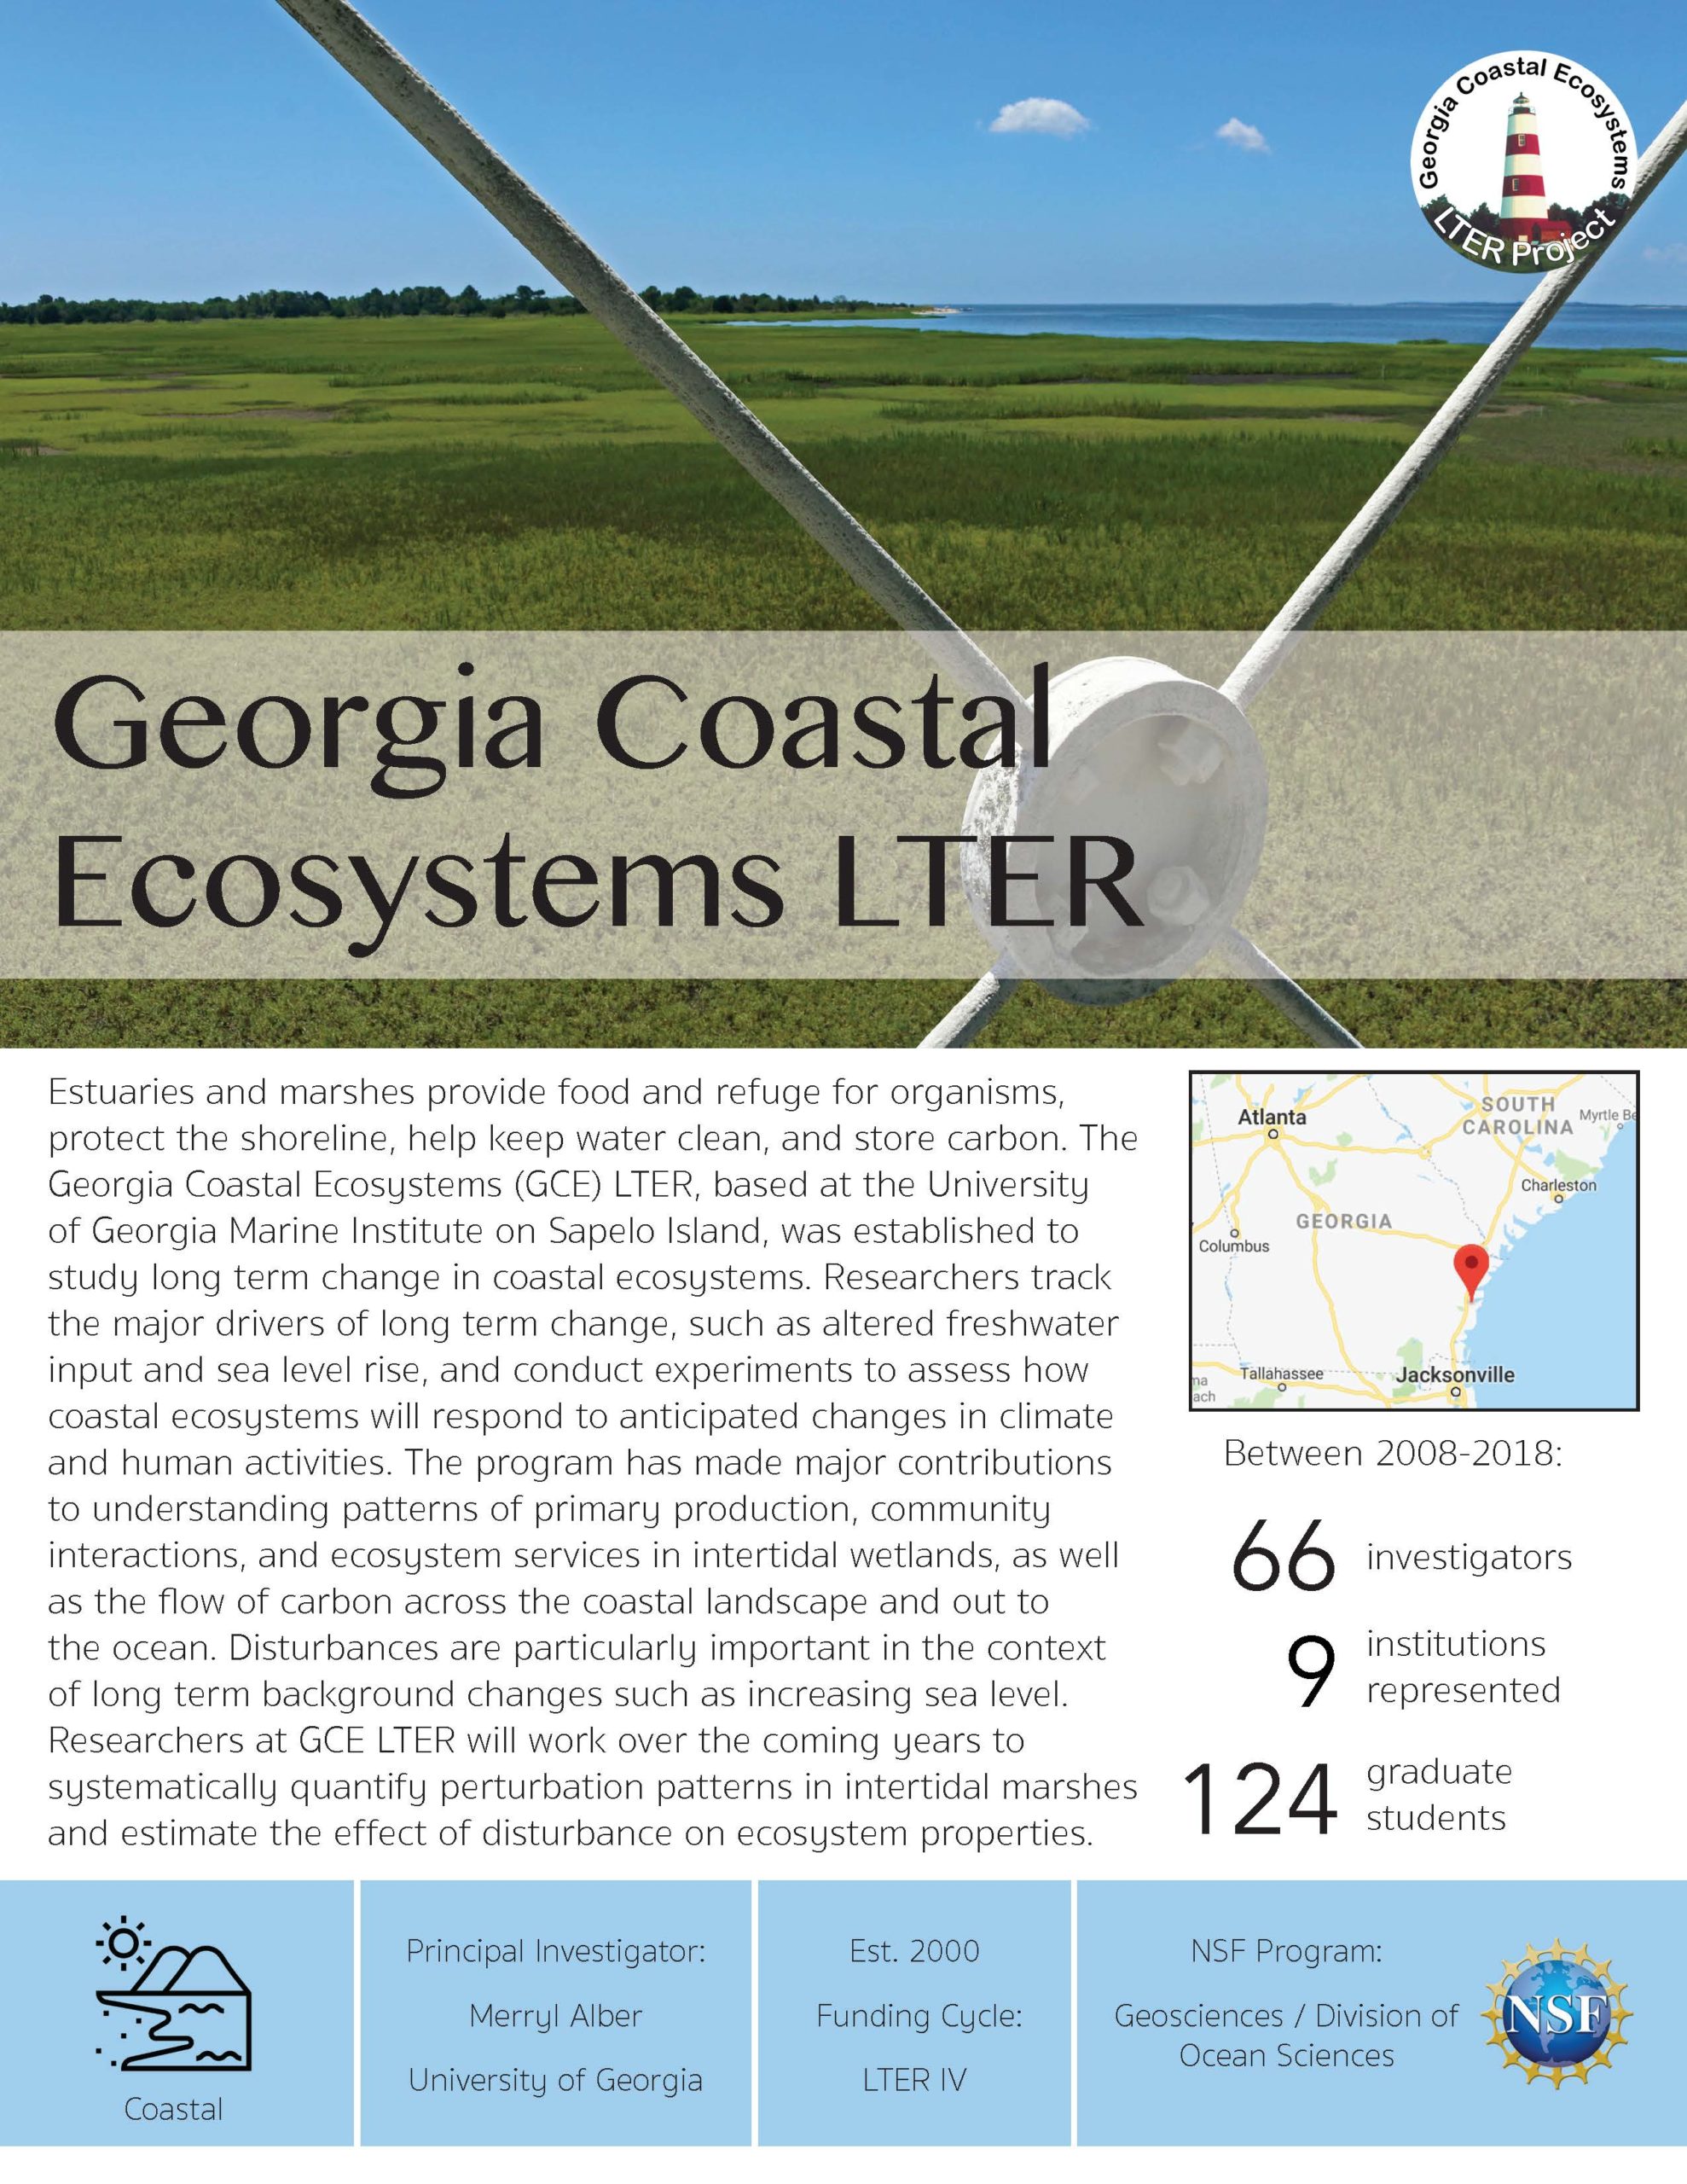 Georgia Coastal Ecosystems LTER site brief 2019